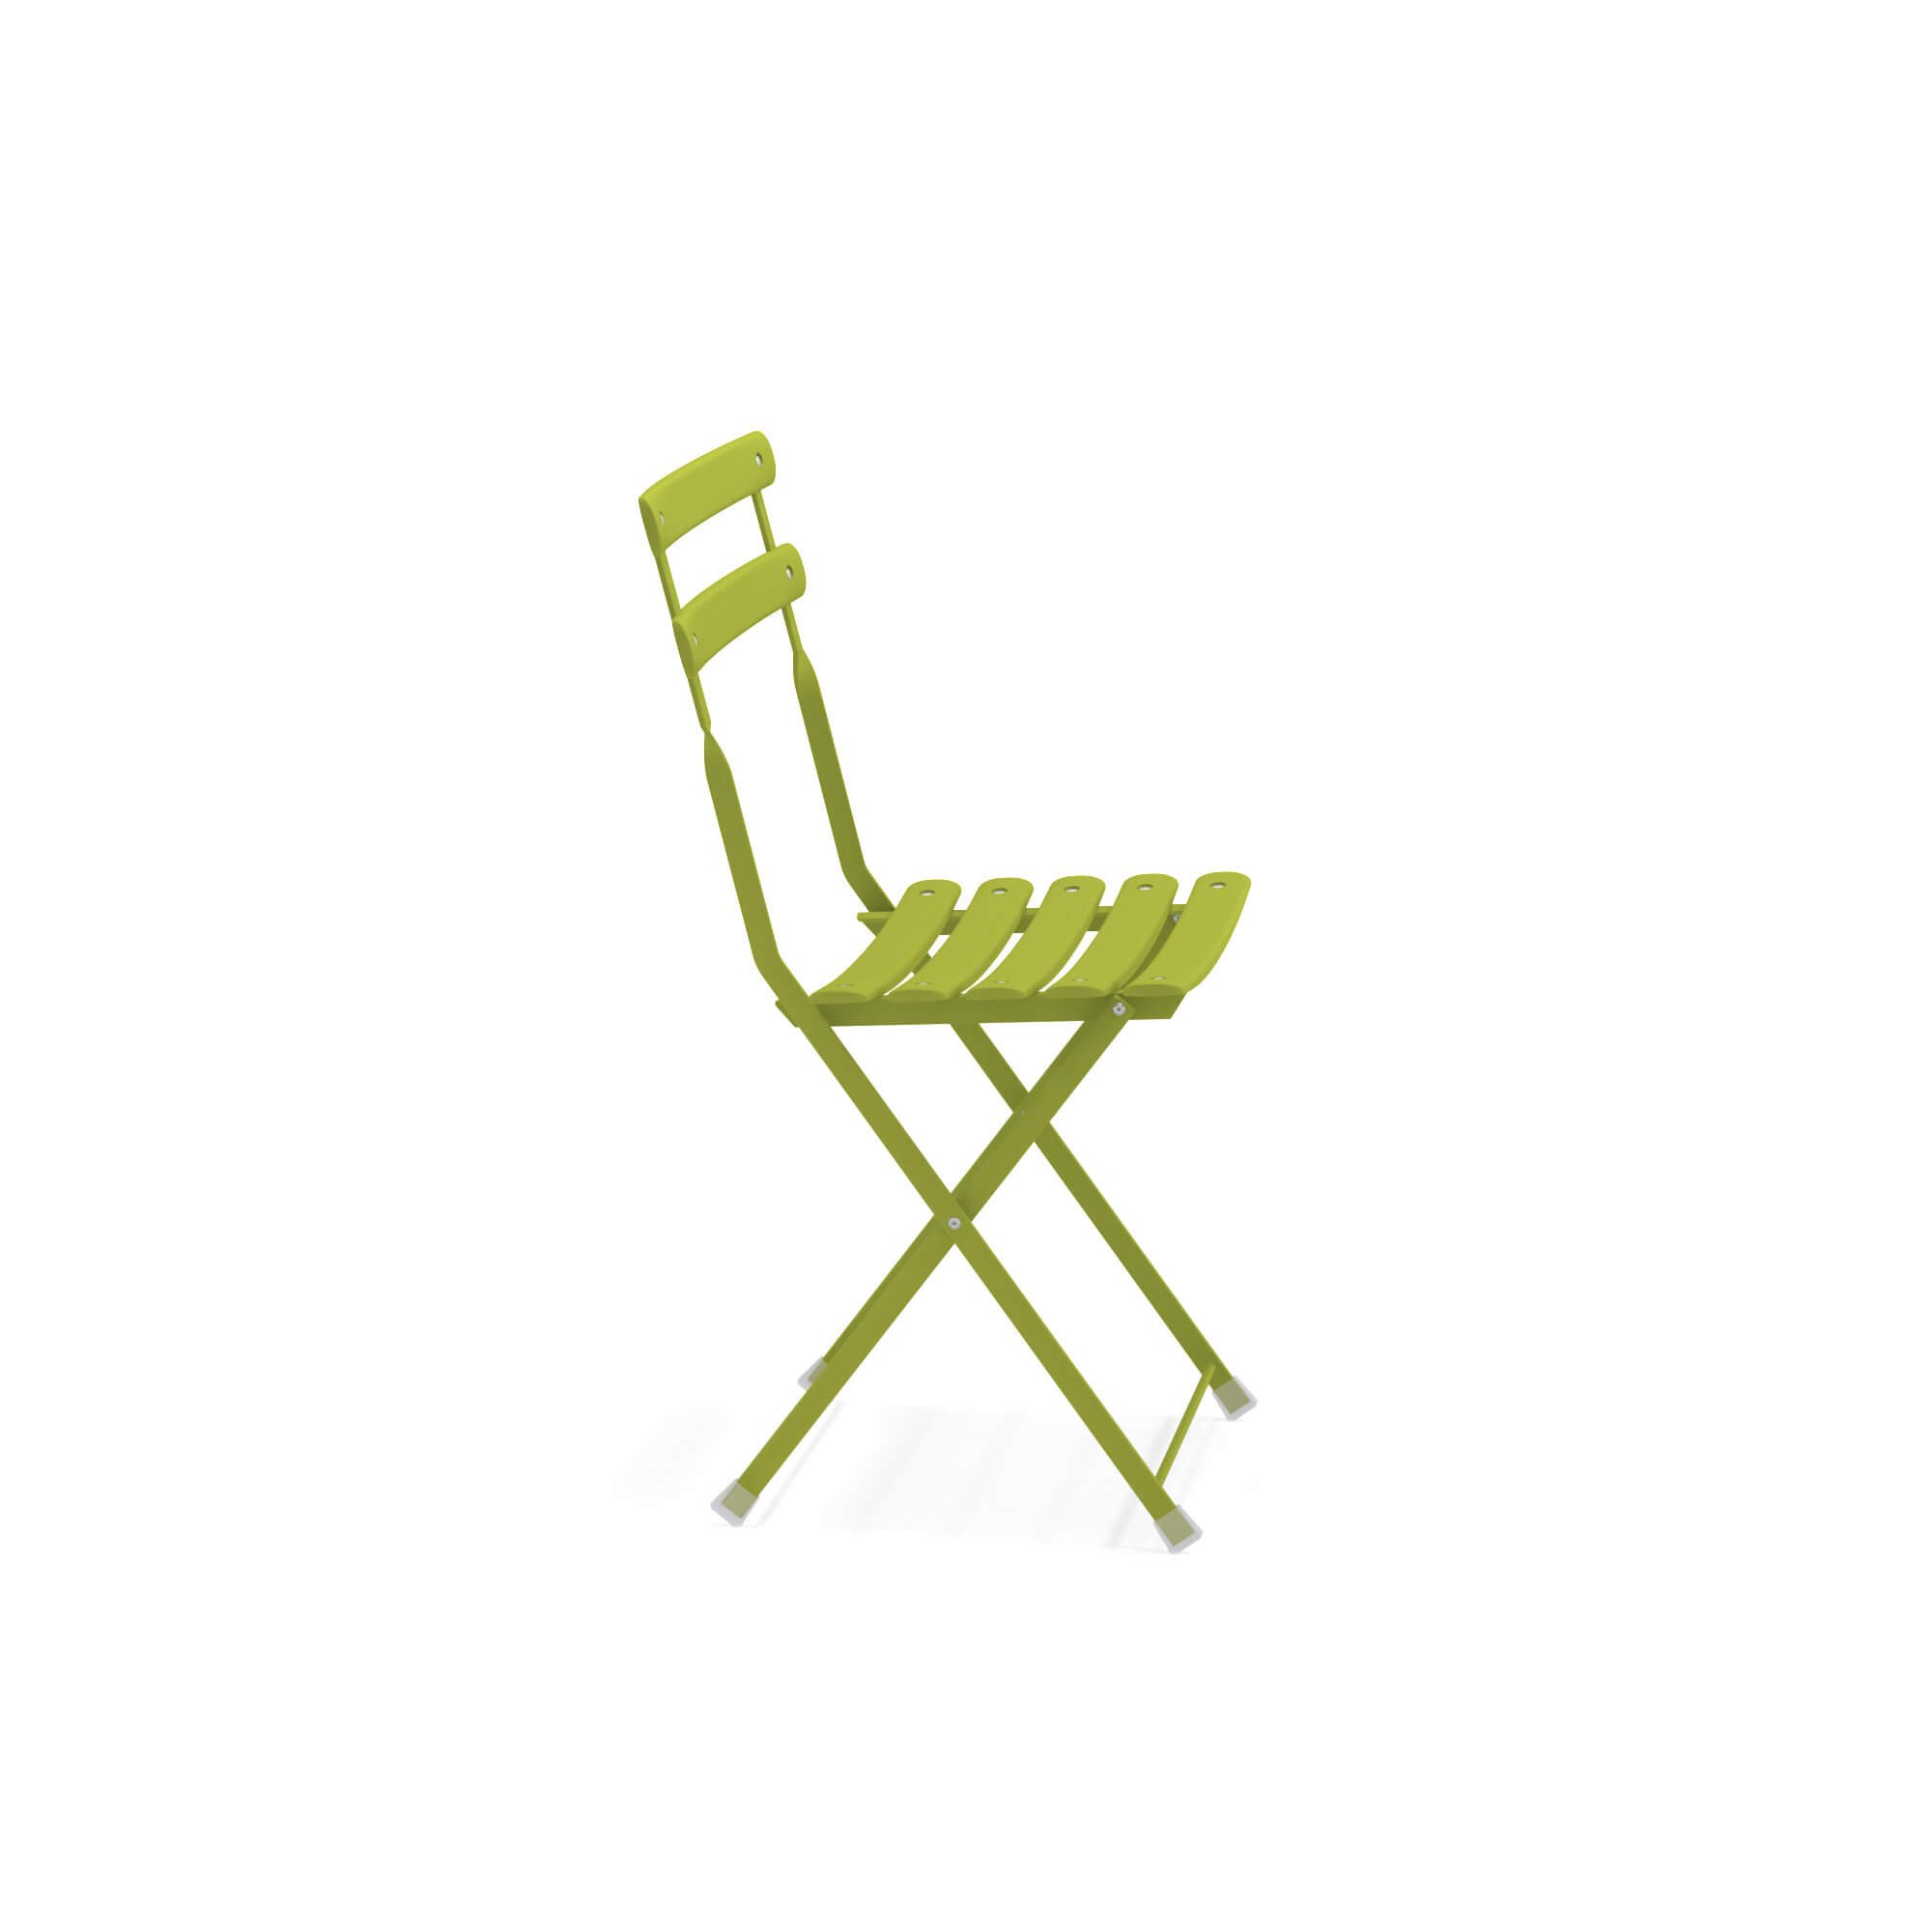 Arc en Ciel Folding Chair  from Emu, designed by EMU Design Studio